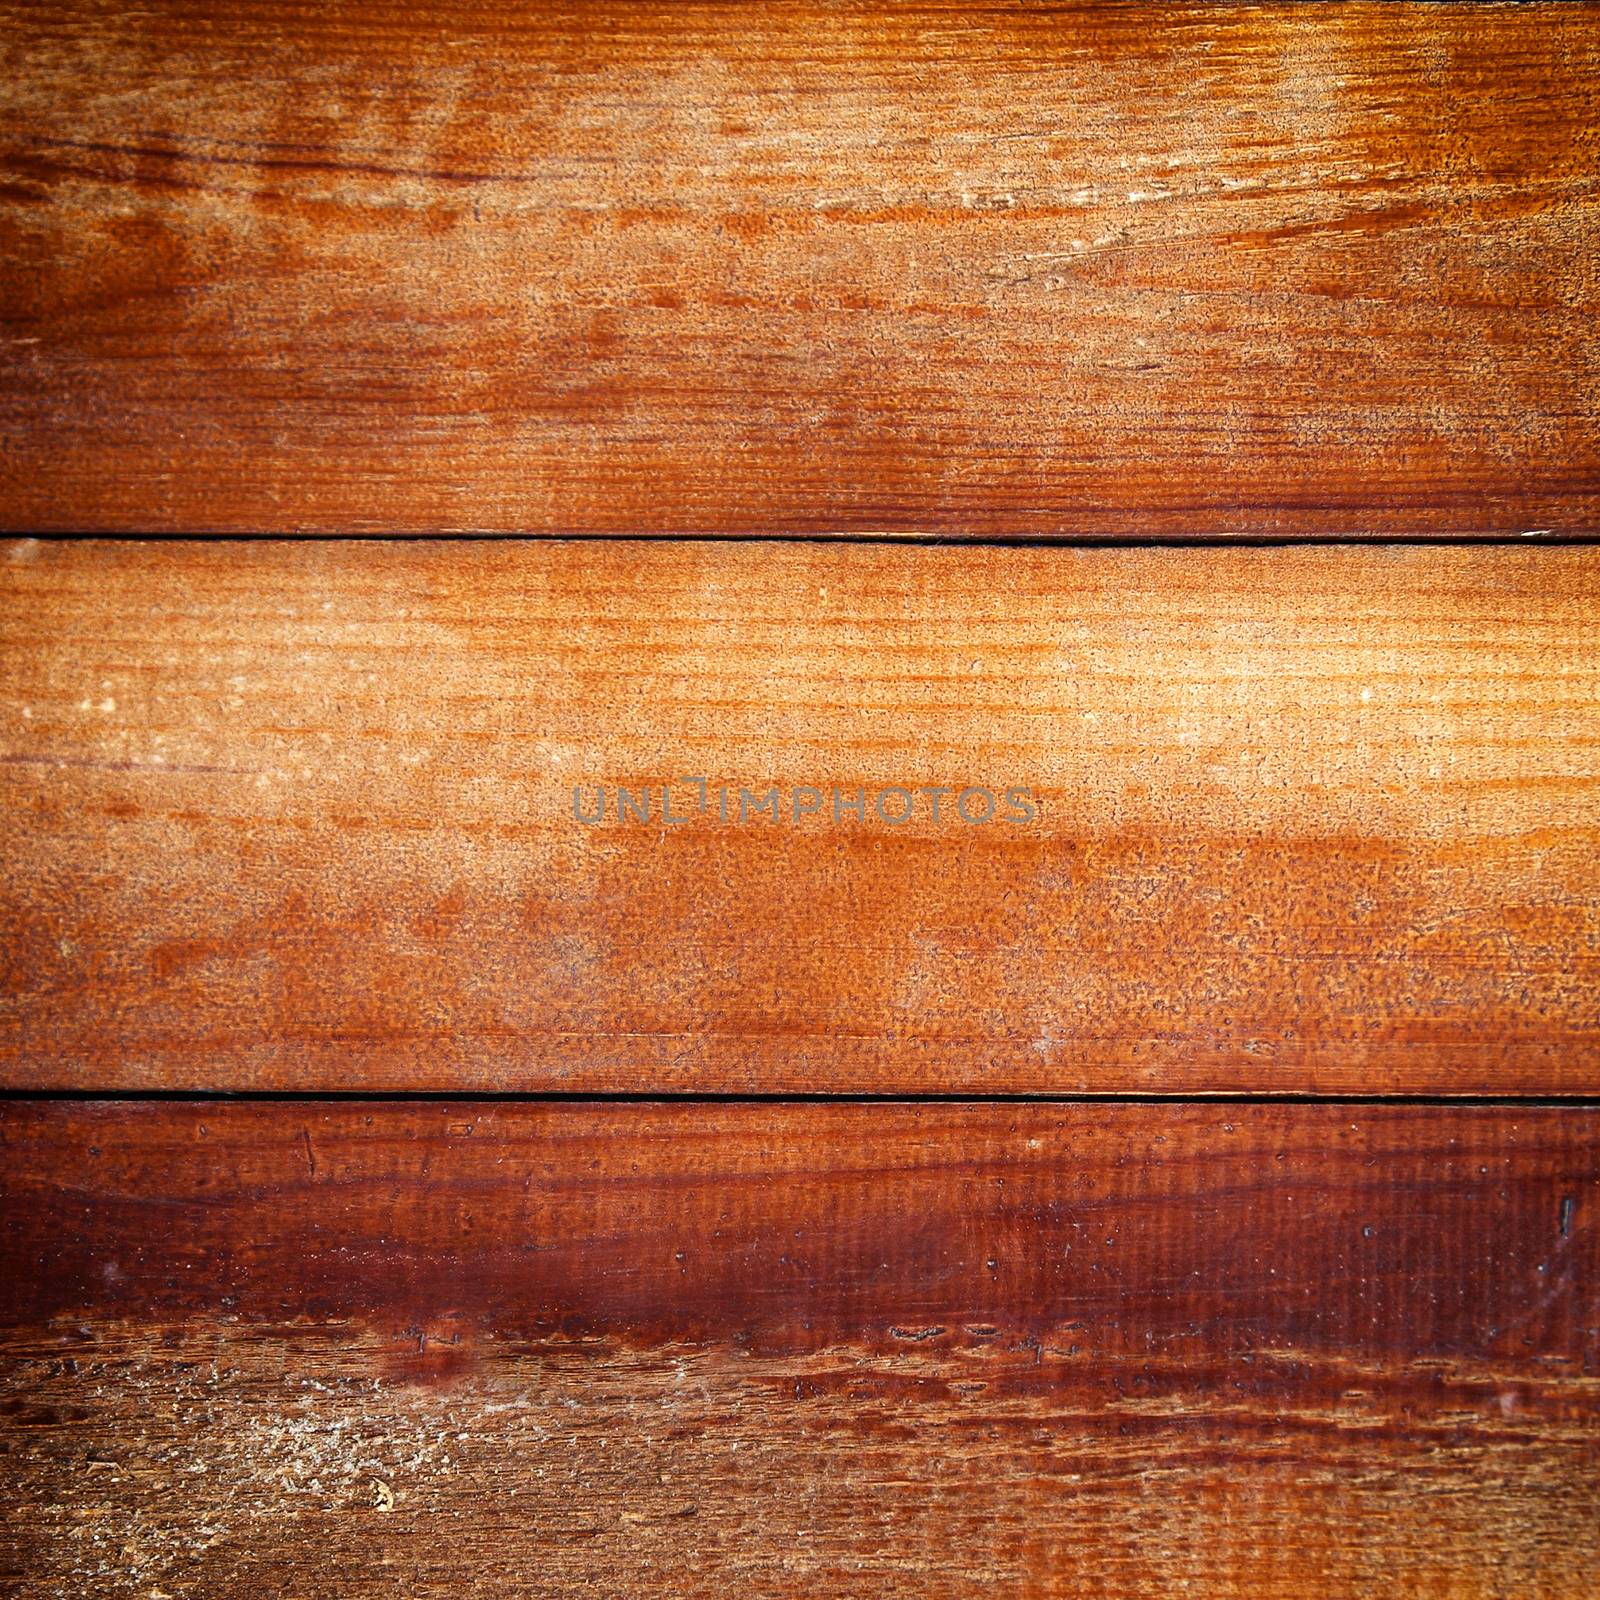 Wooden texture by vapi